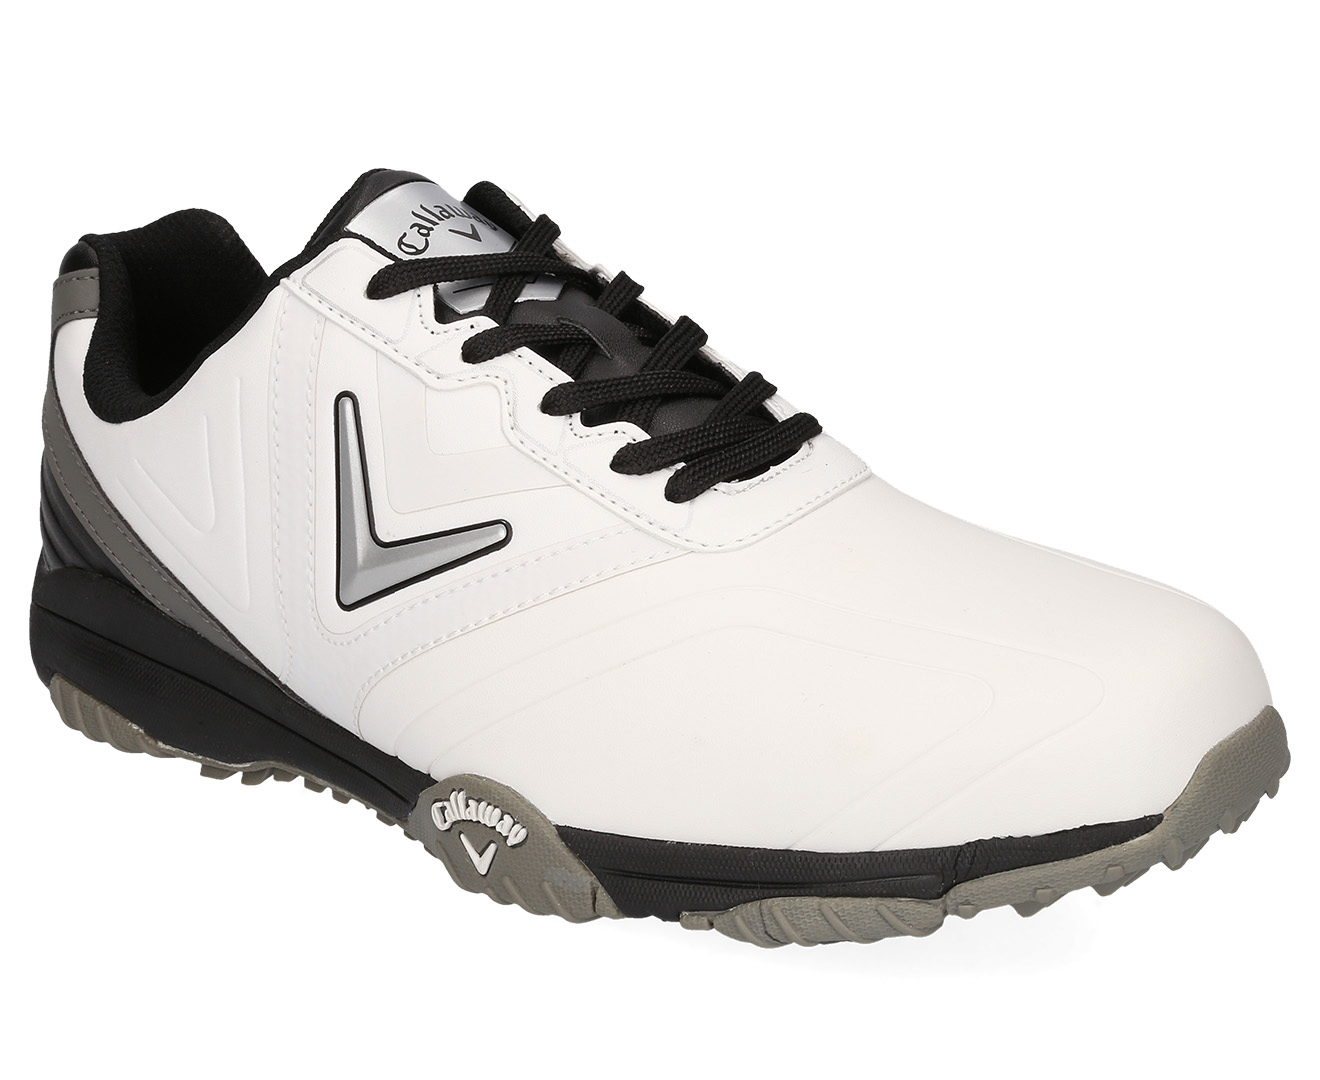 callaway chev comfort golf shoes